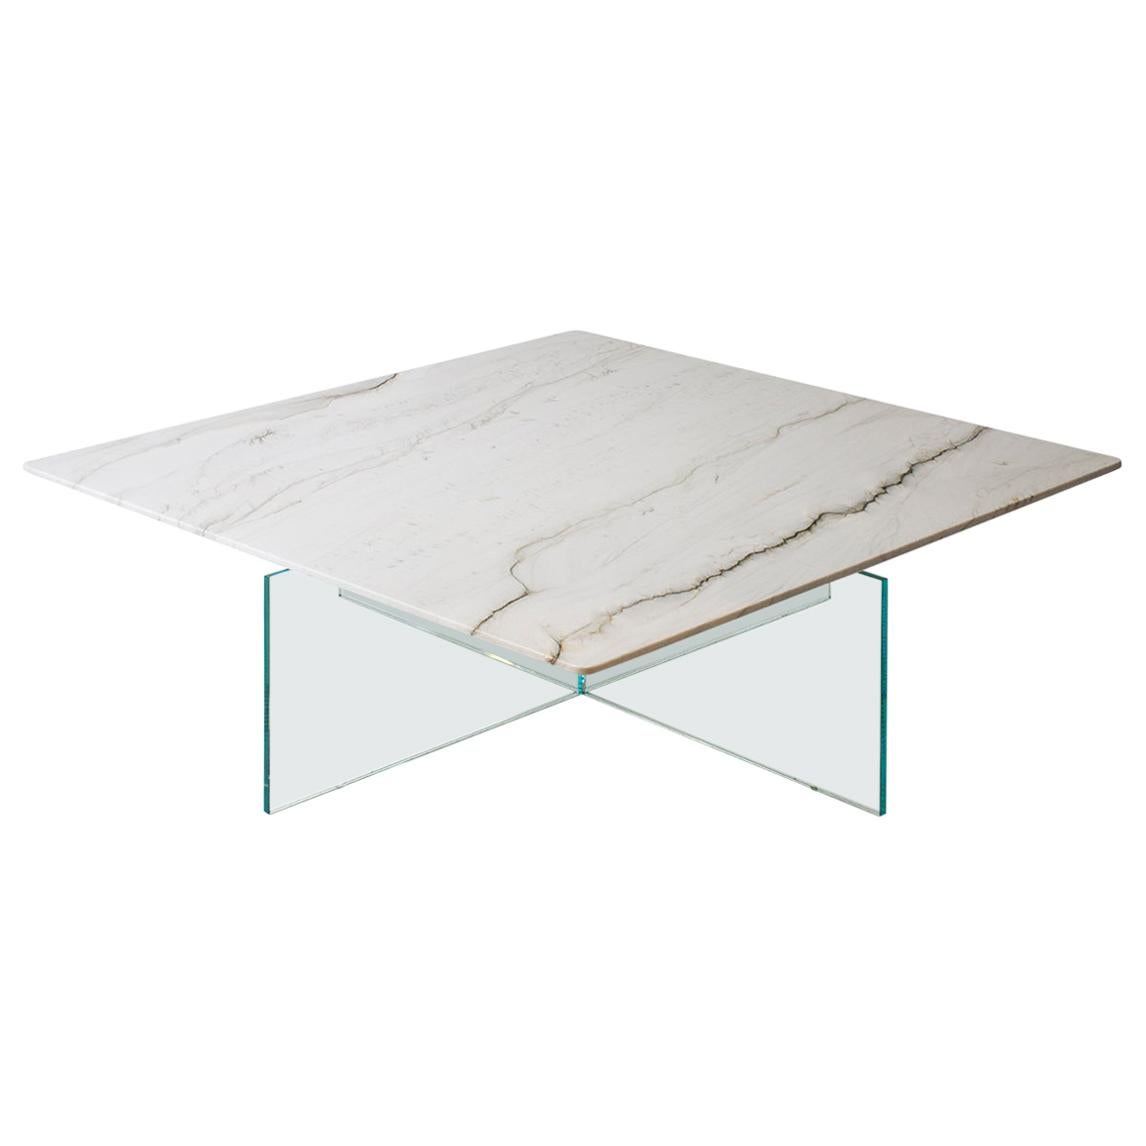 Mini table basse Beside Myself de Claste en marbre Cararra Classico et base en verre